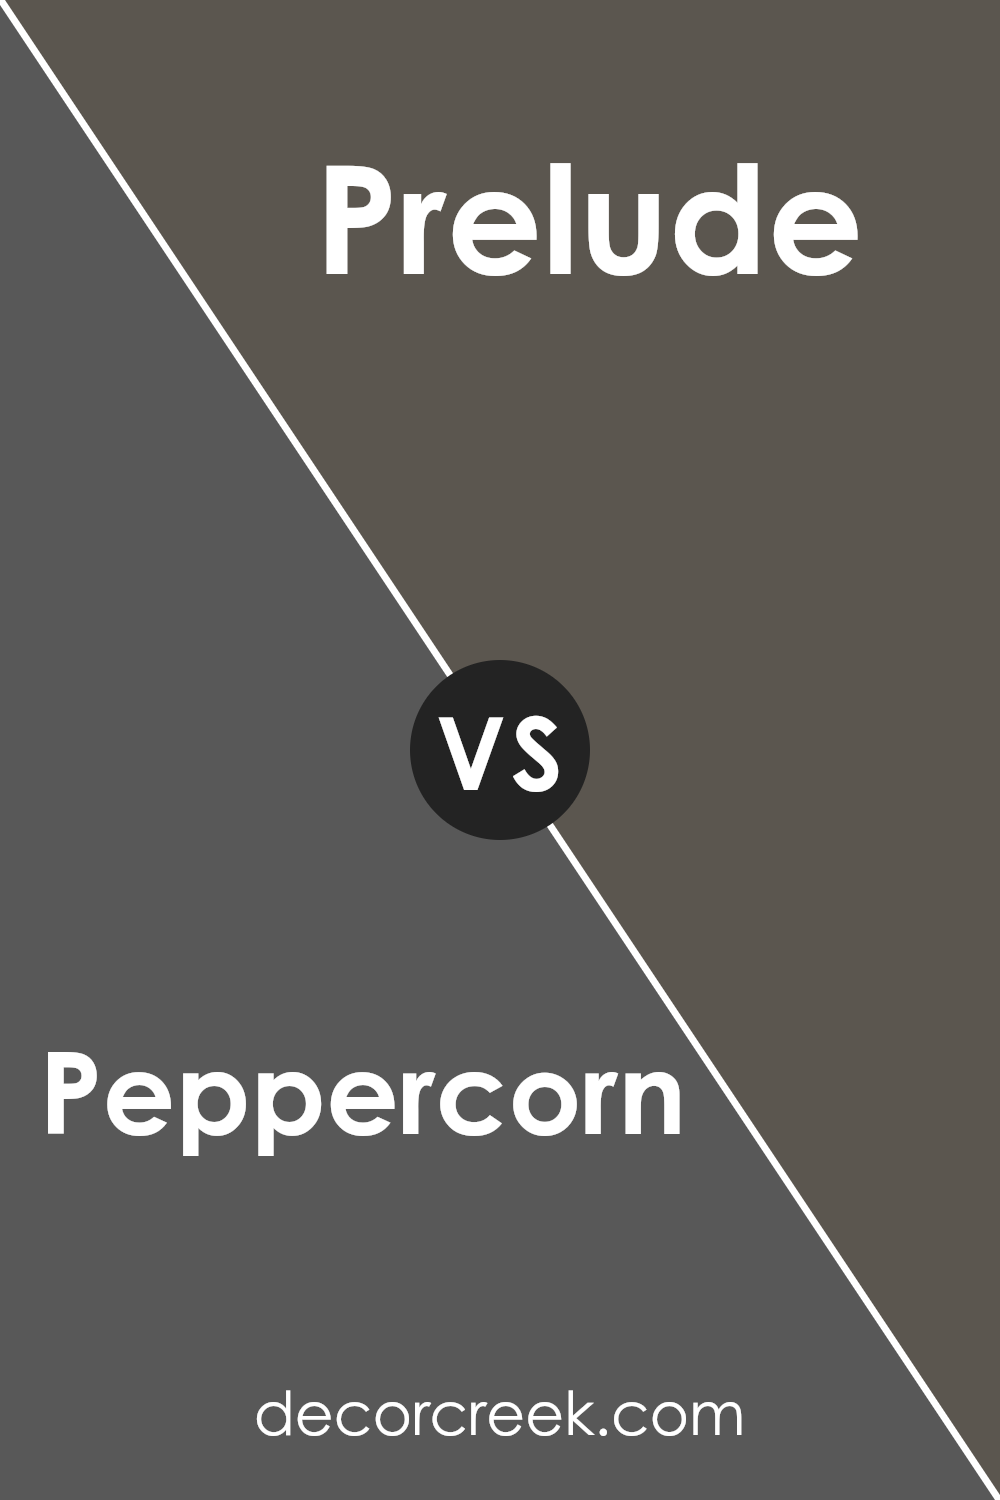 peppercorn_sw_7674_vs_prelude_sw_9620